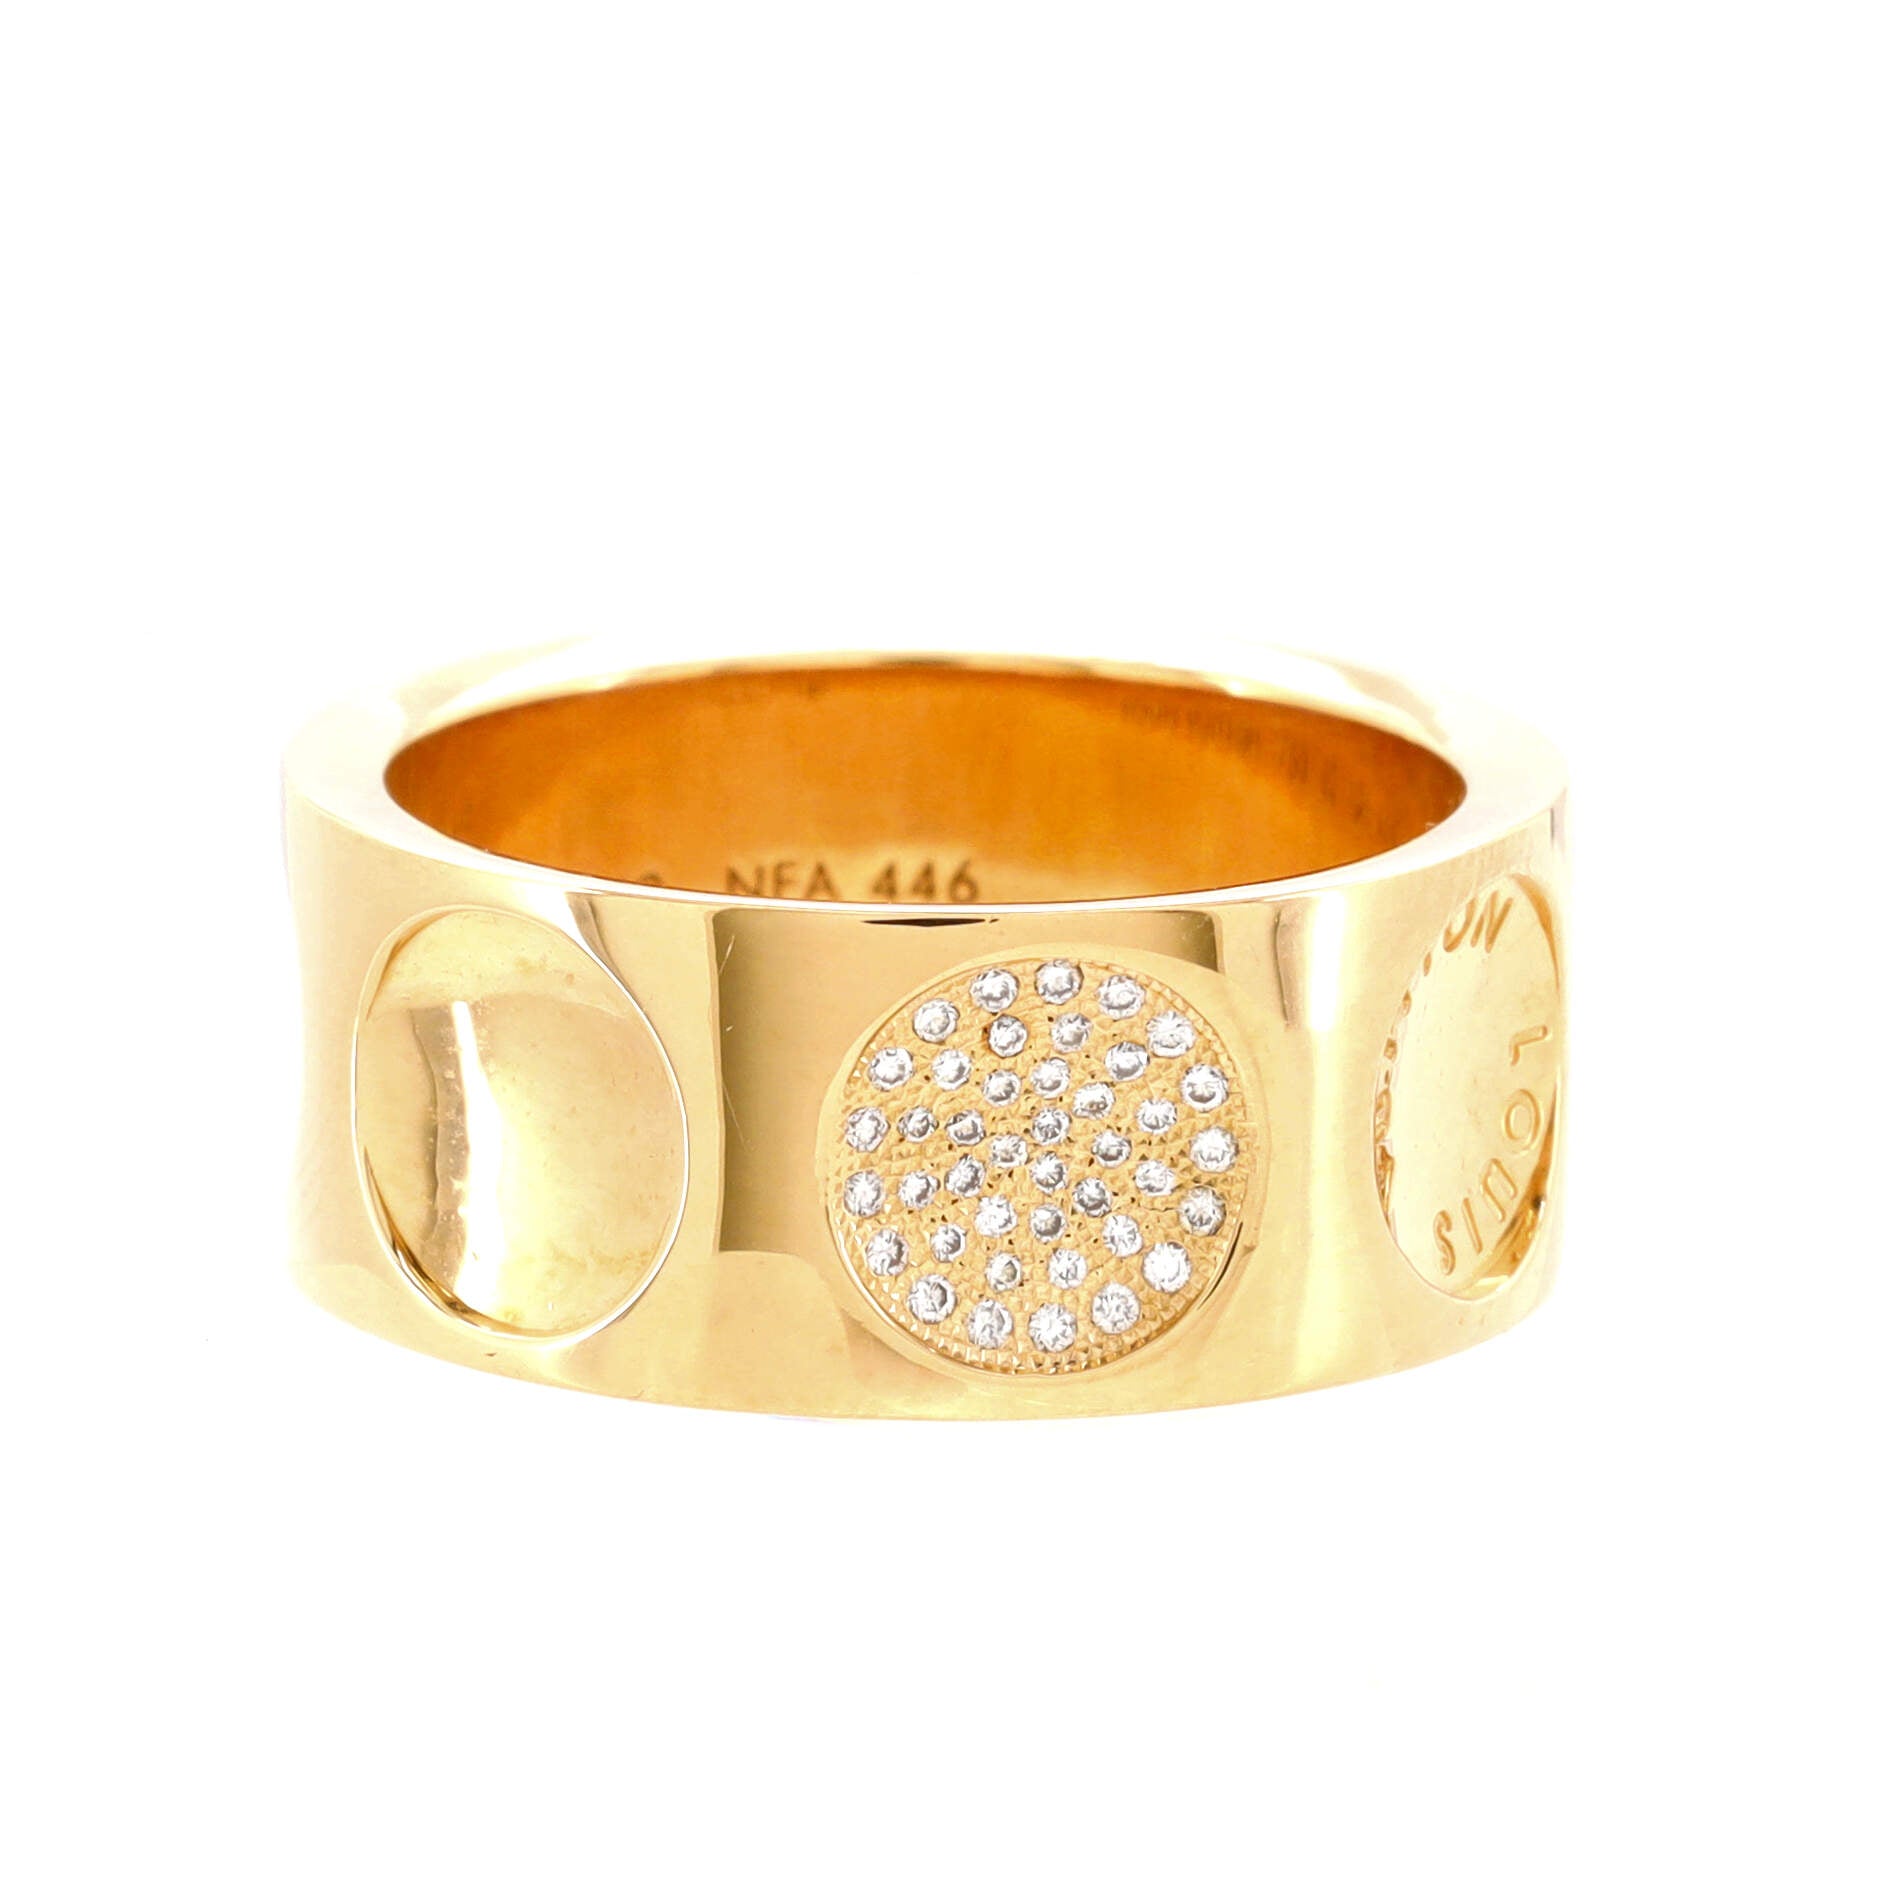 Louis Vuitton 18K Diamond Empreinte Ring - 18K White Gold Band